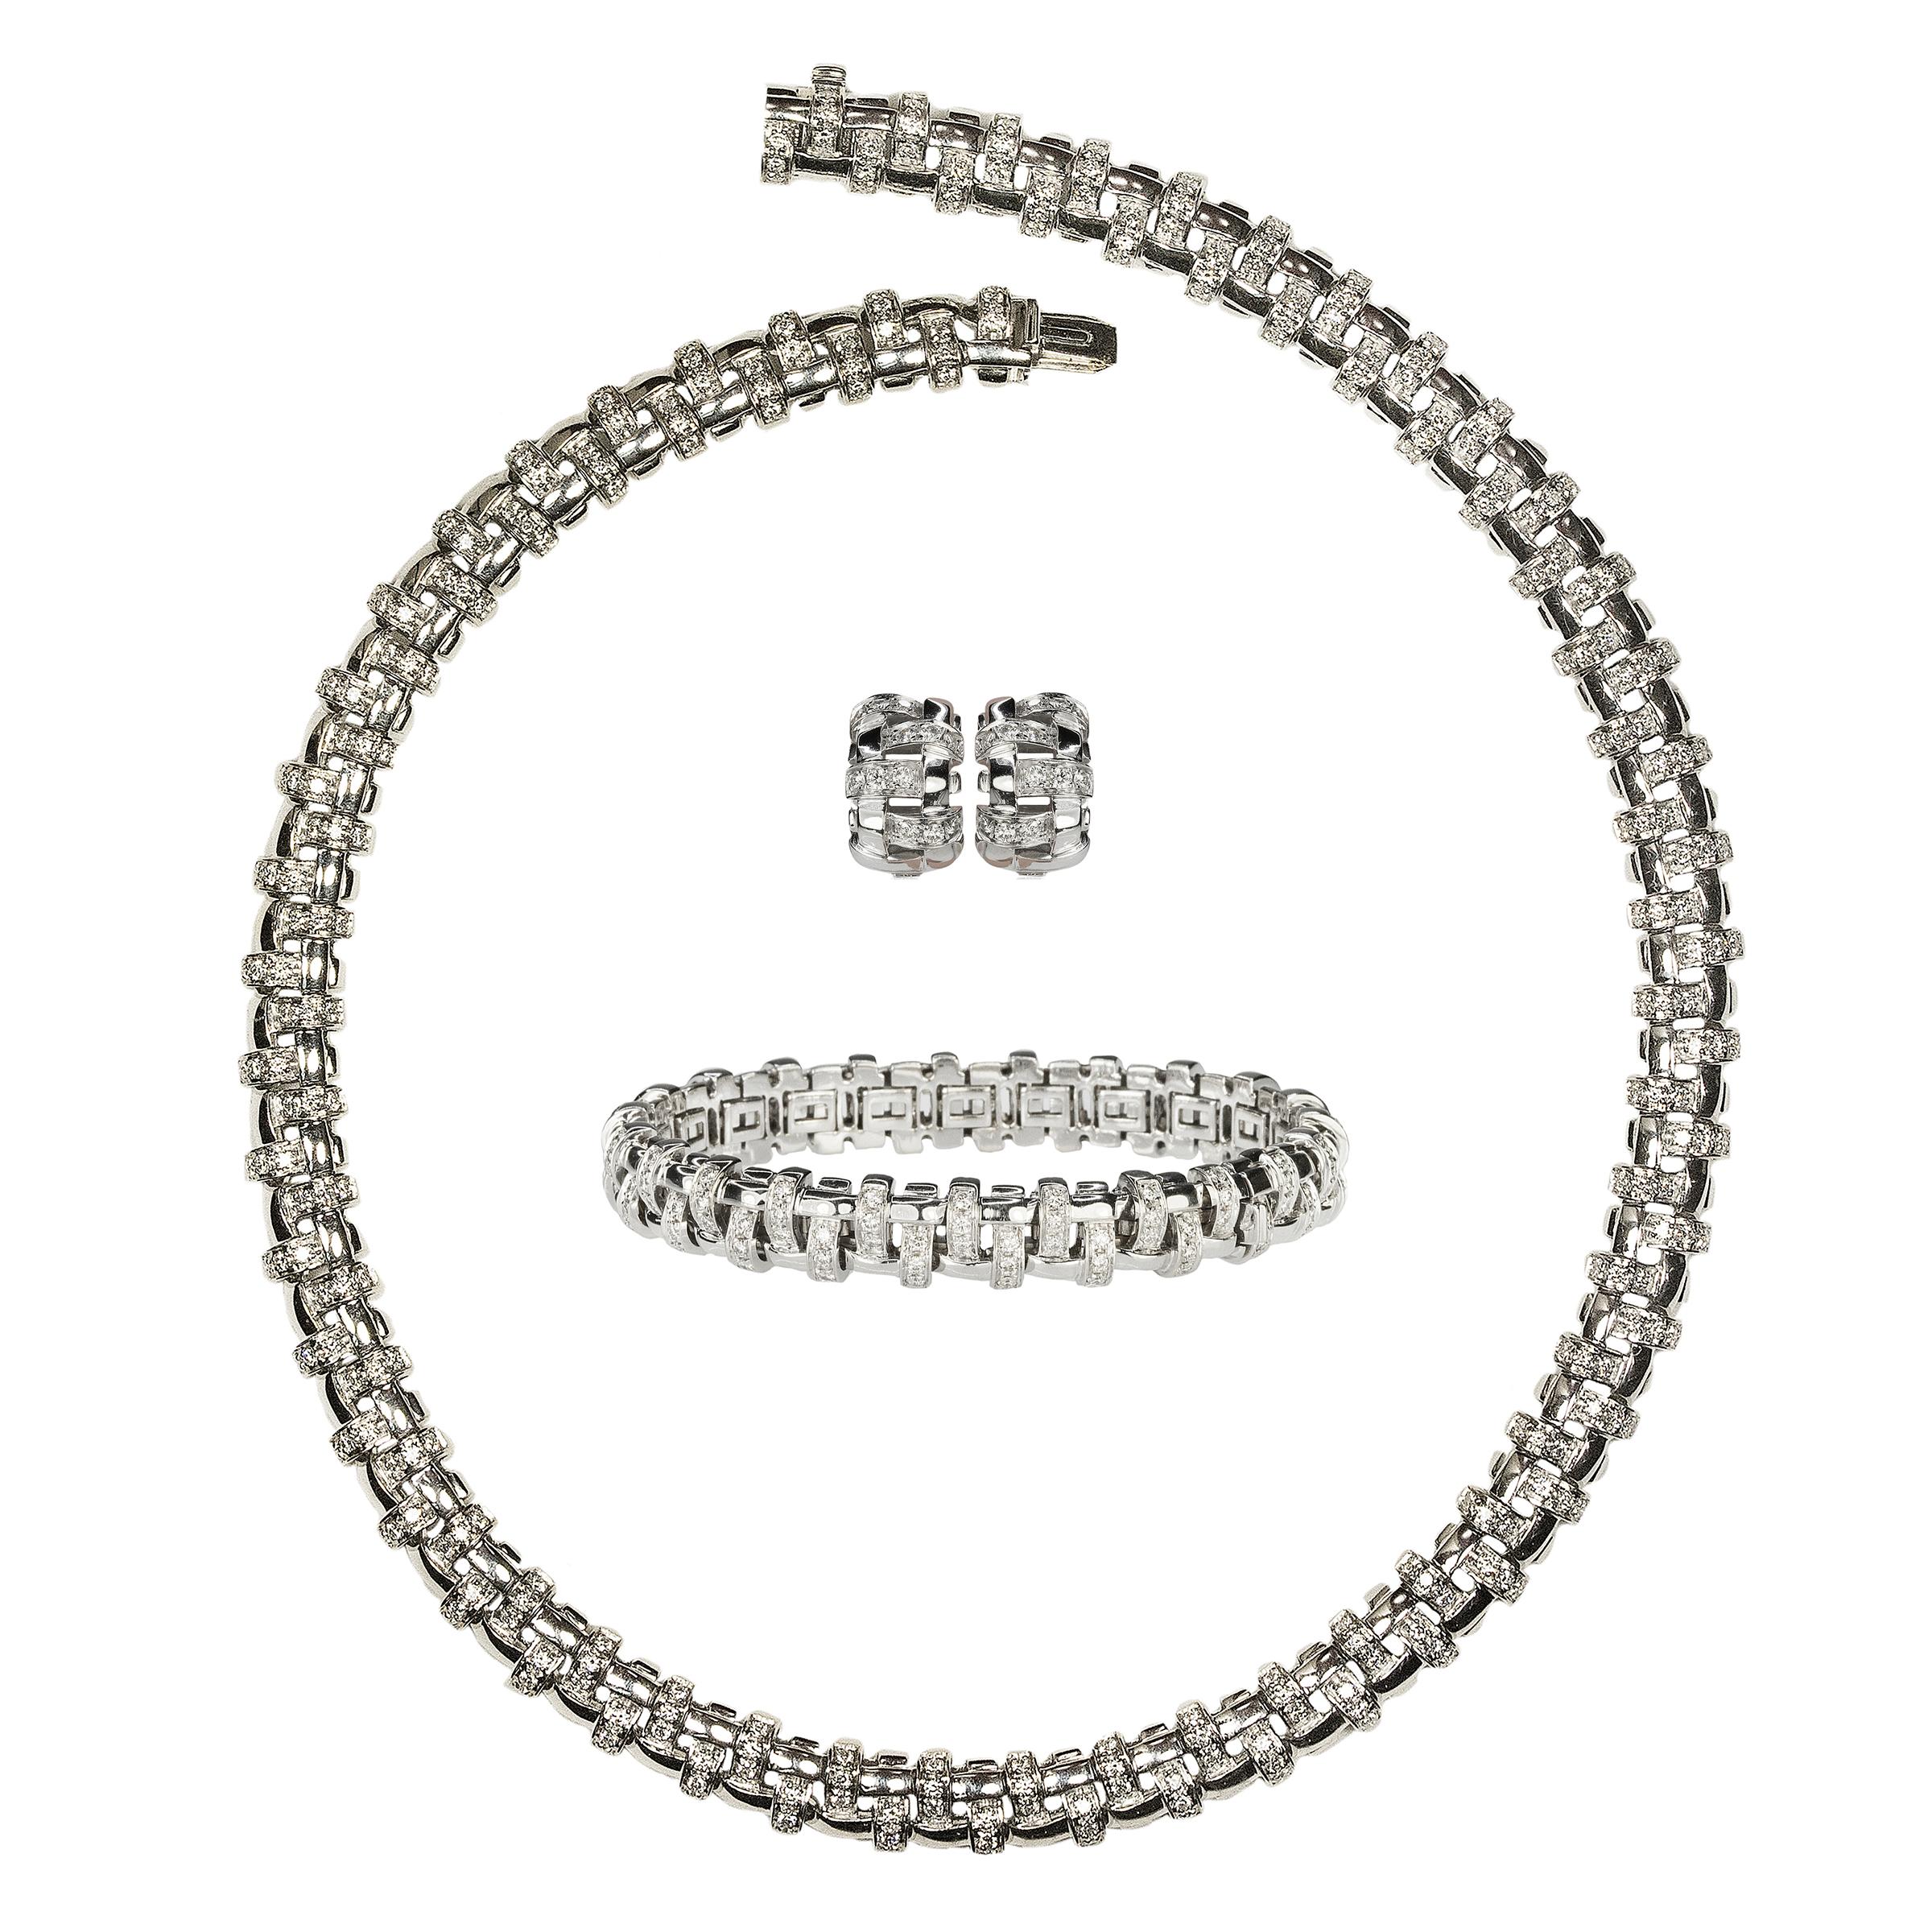 Tiffany & Co. Lattice 18k Gold and Diamond Necklace, Bracelet & Earring Suite